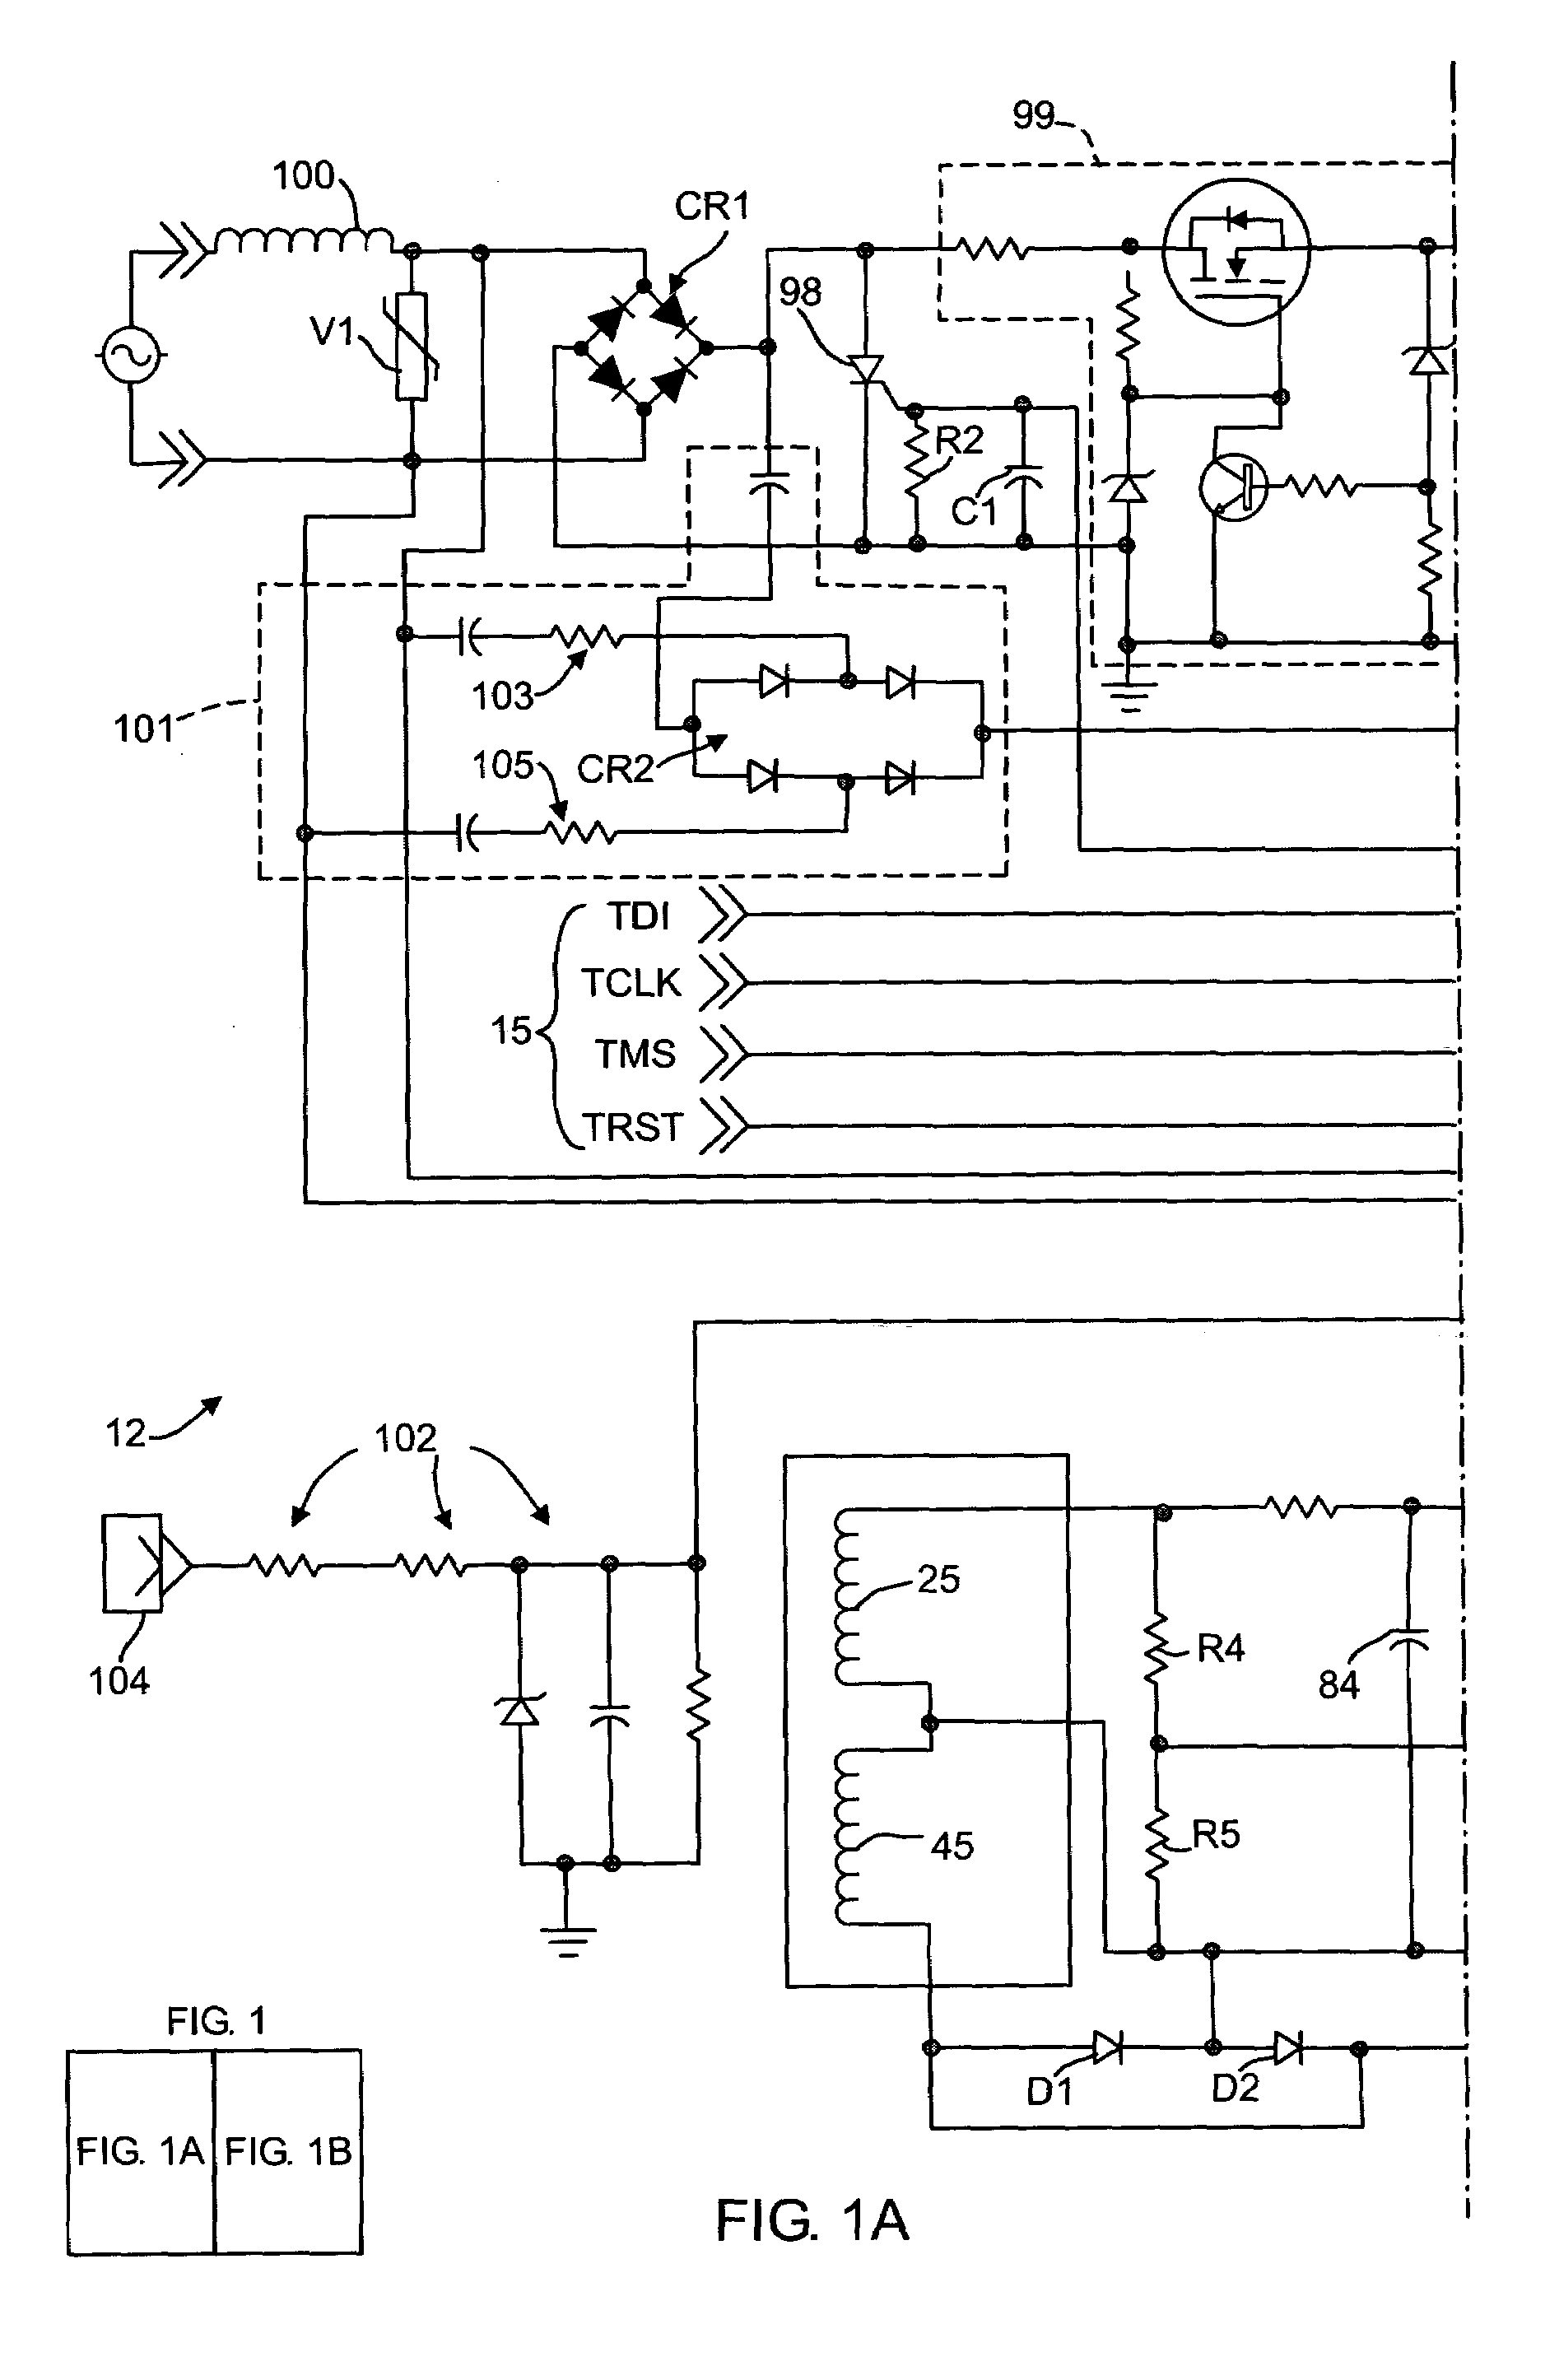 Arc fault circuit interrupter system